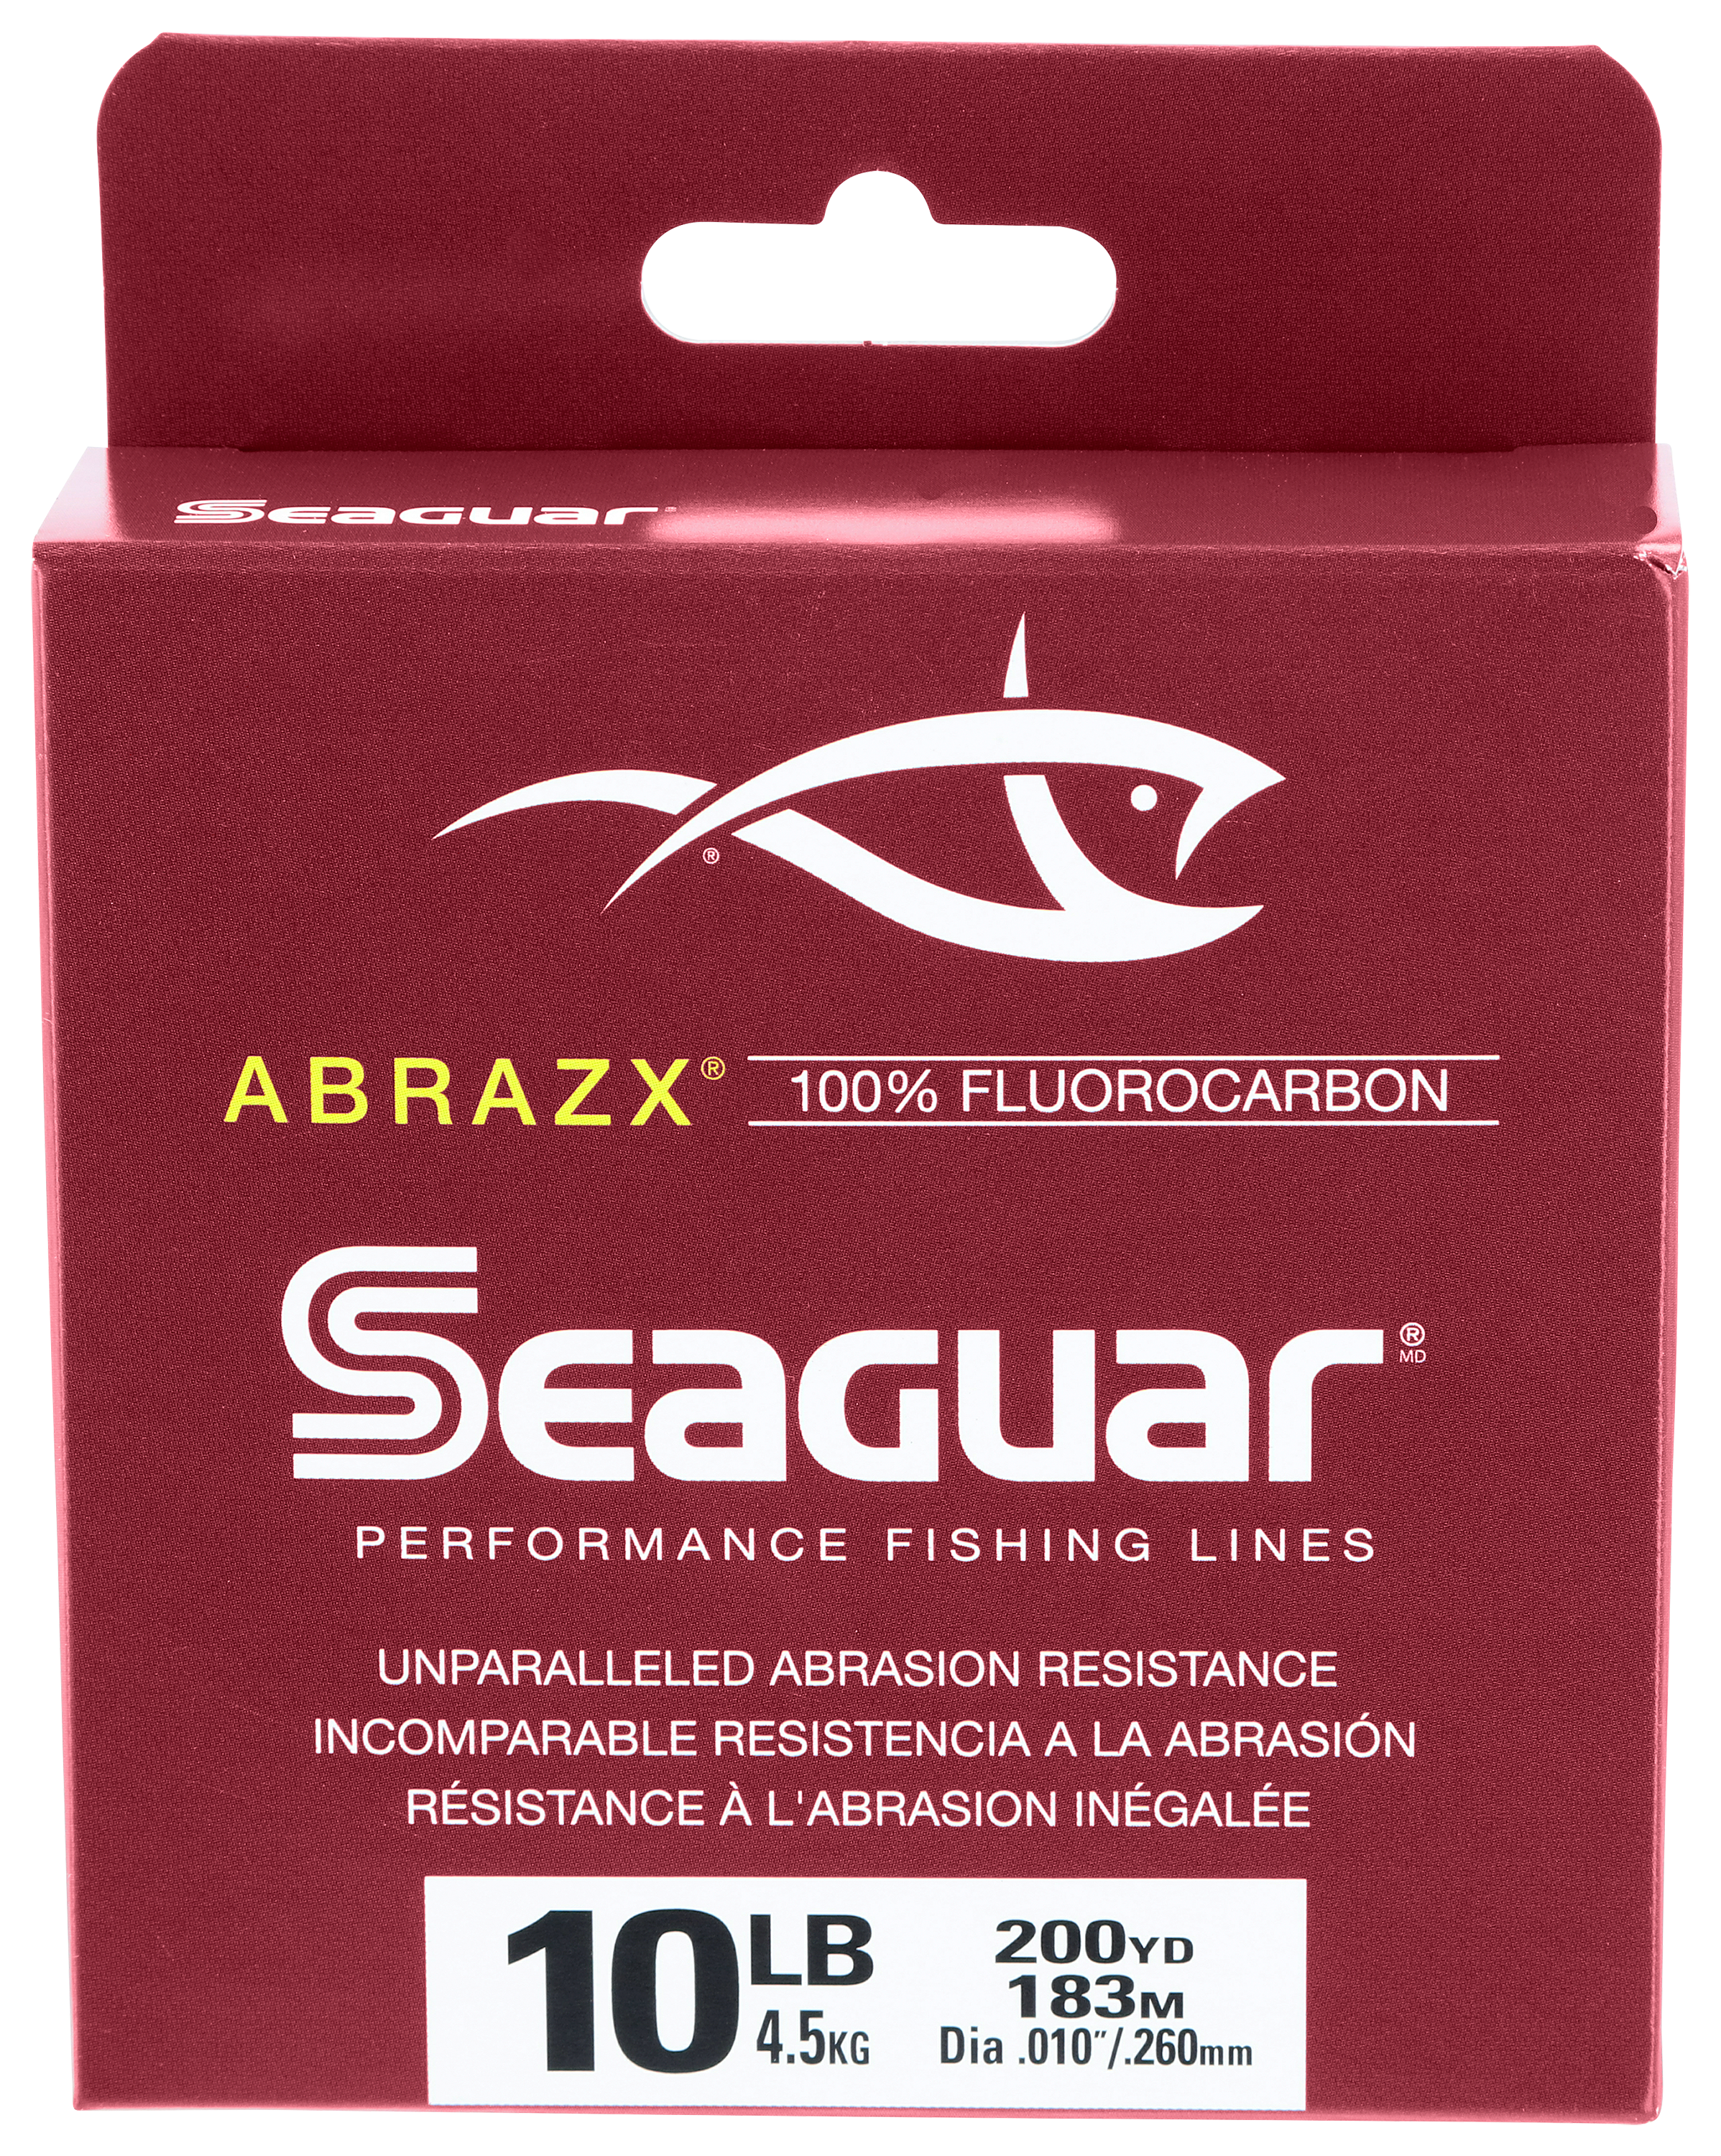 Seaguar TactX Braid & Fluoro Kit